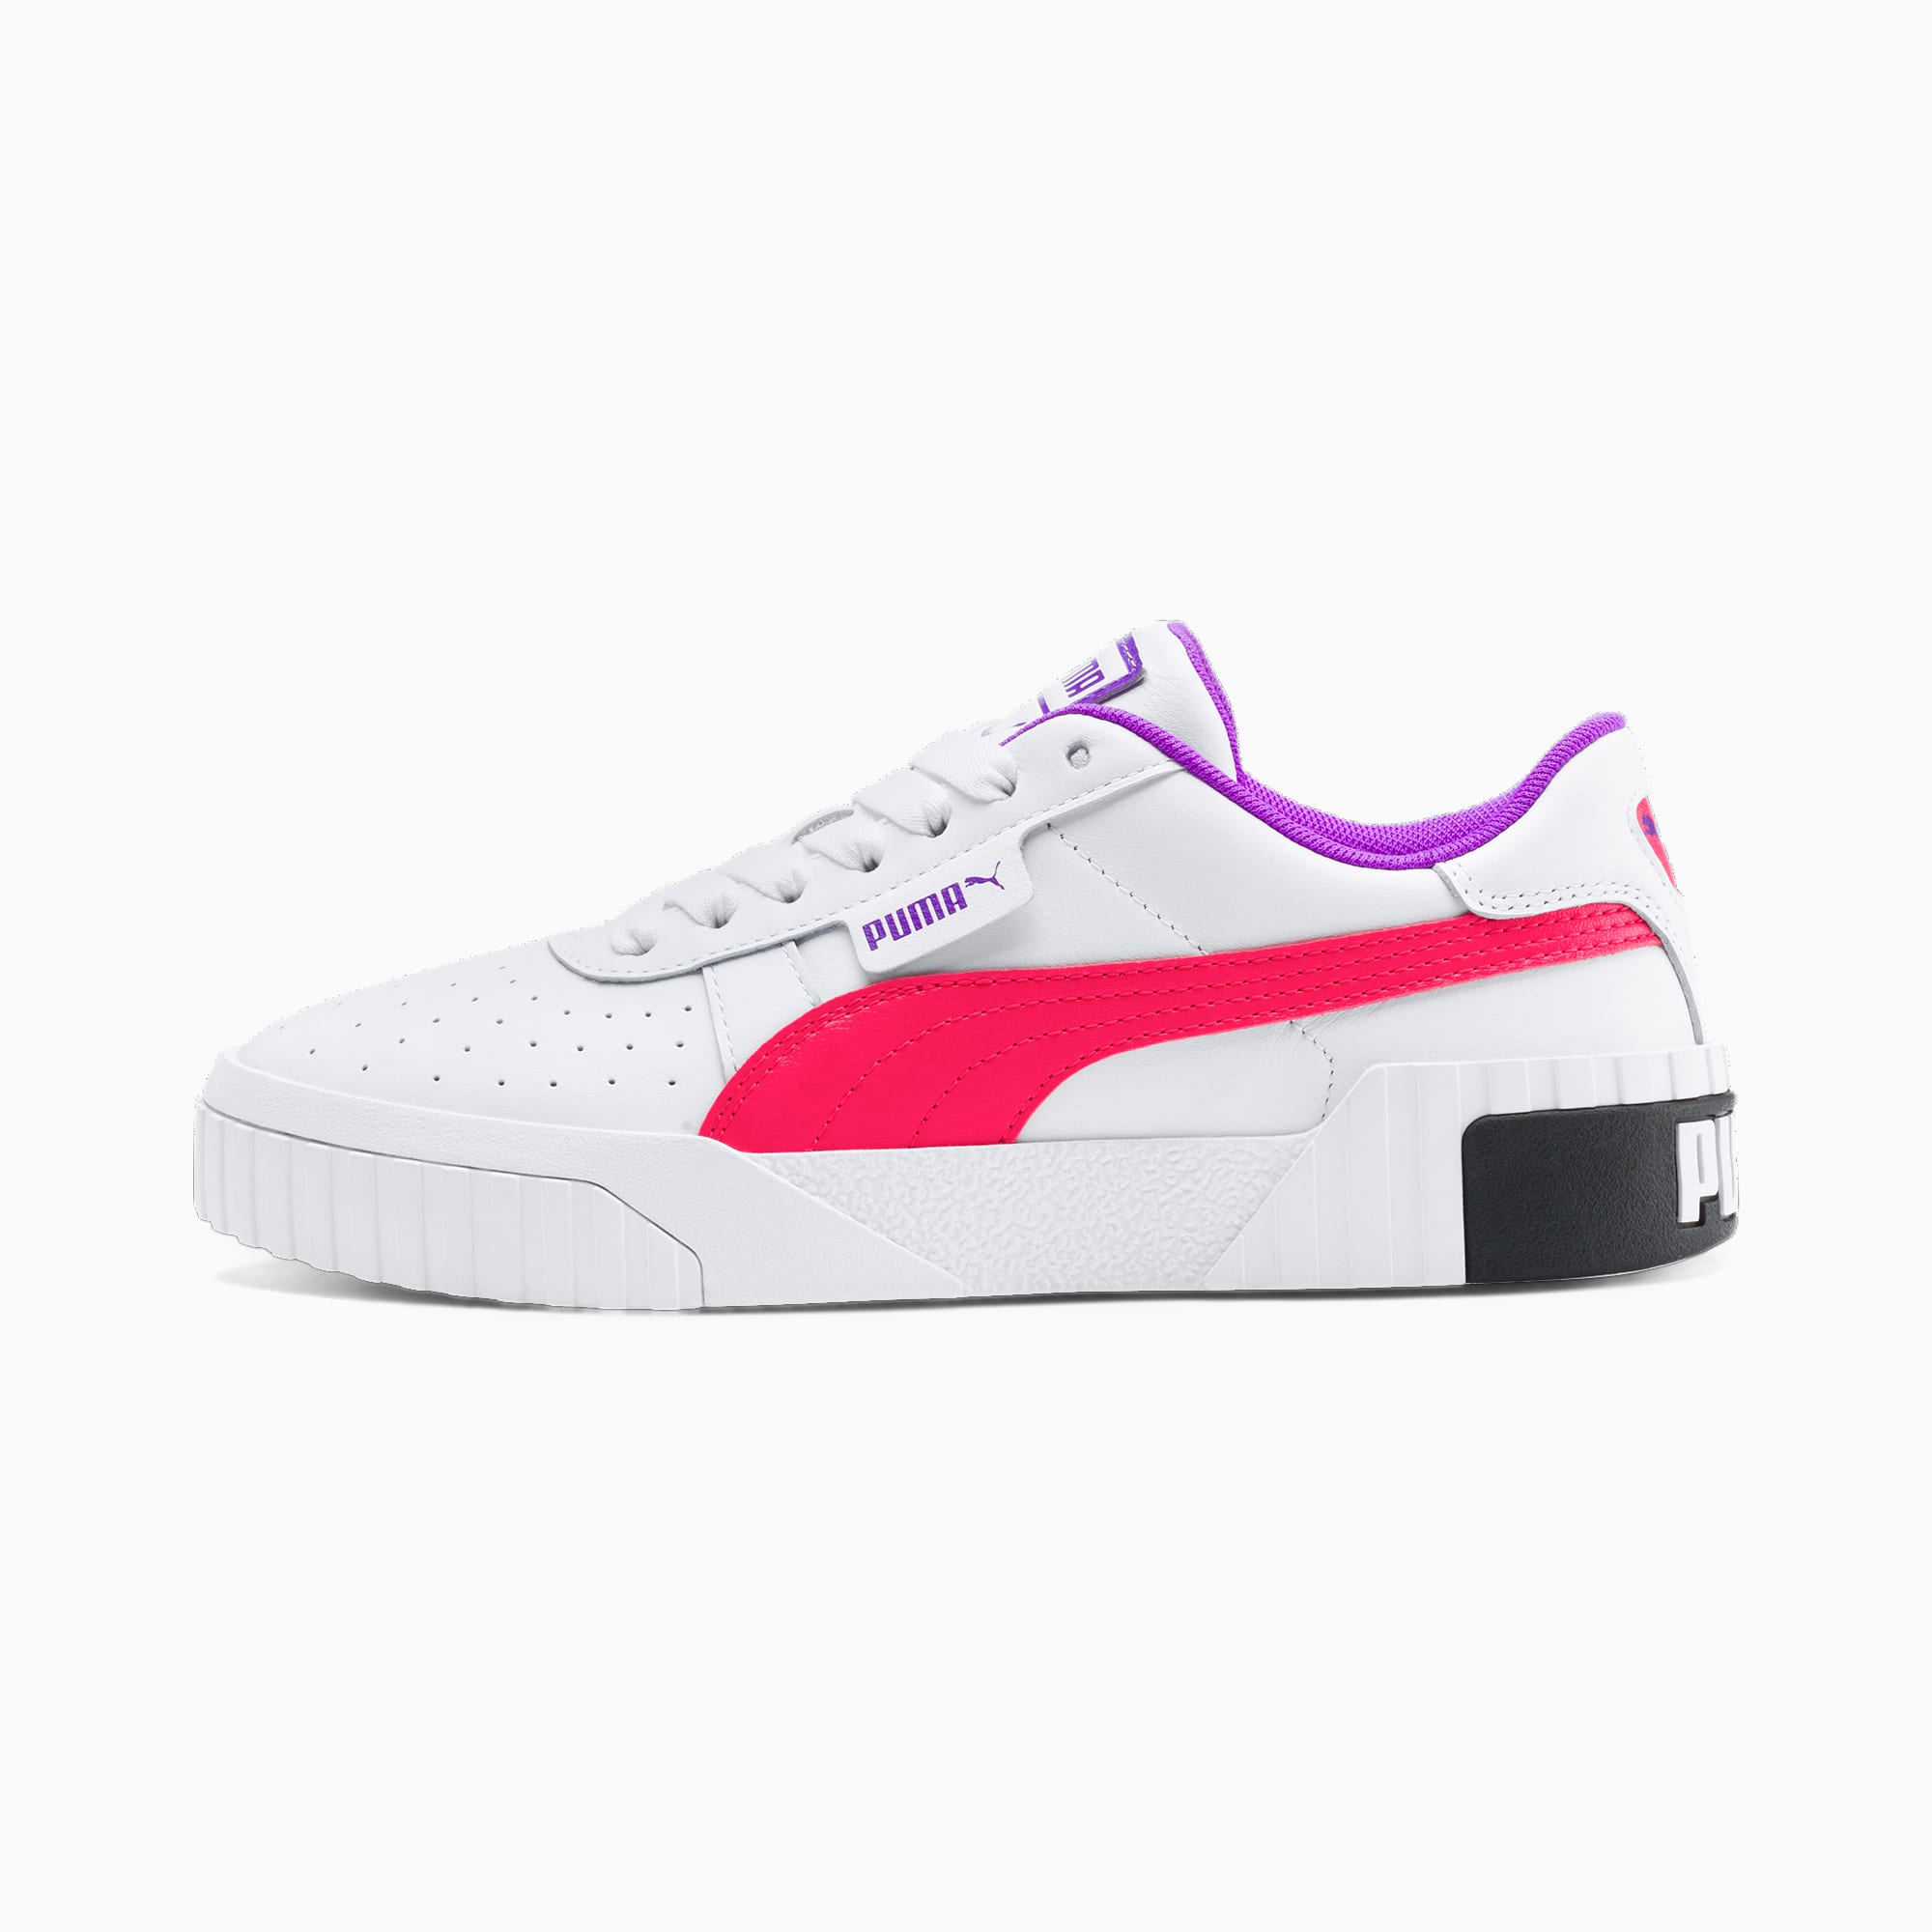 puma cali women's sneakers pink